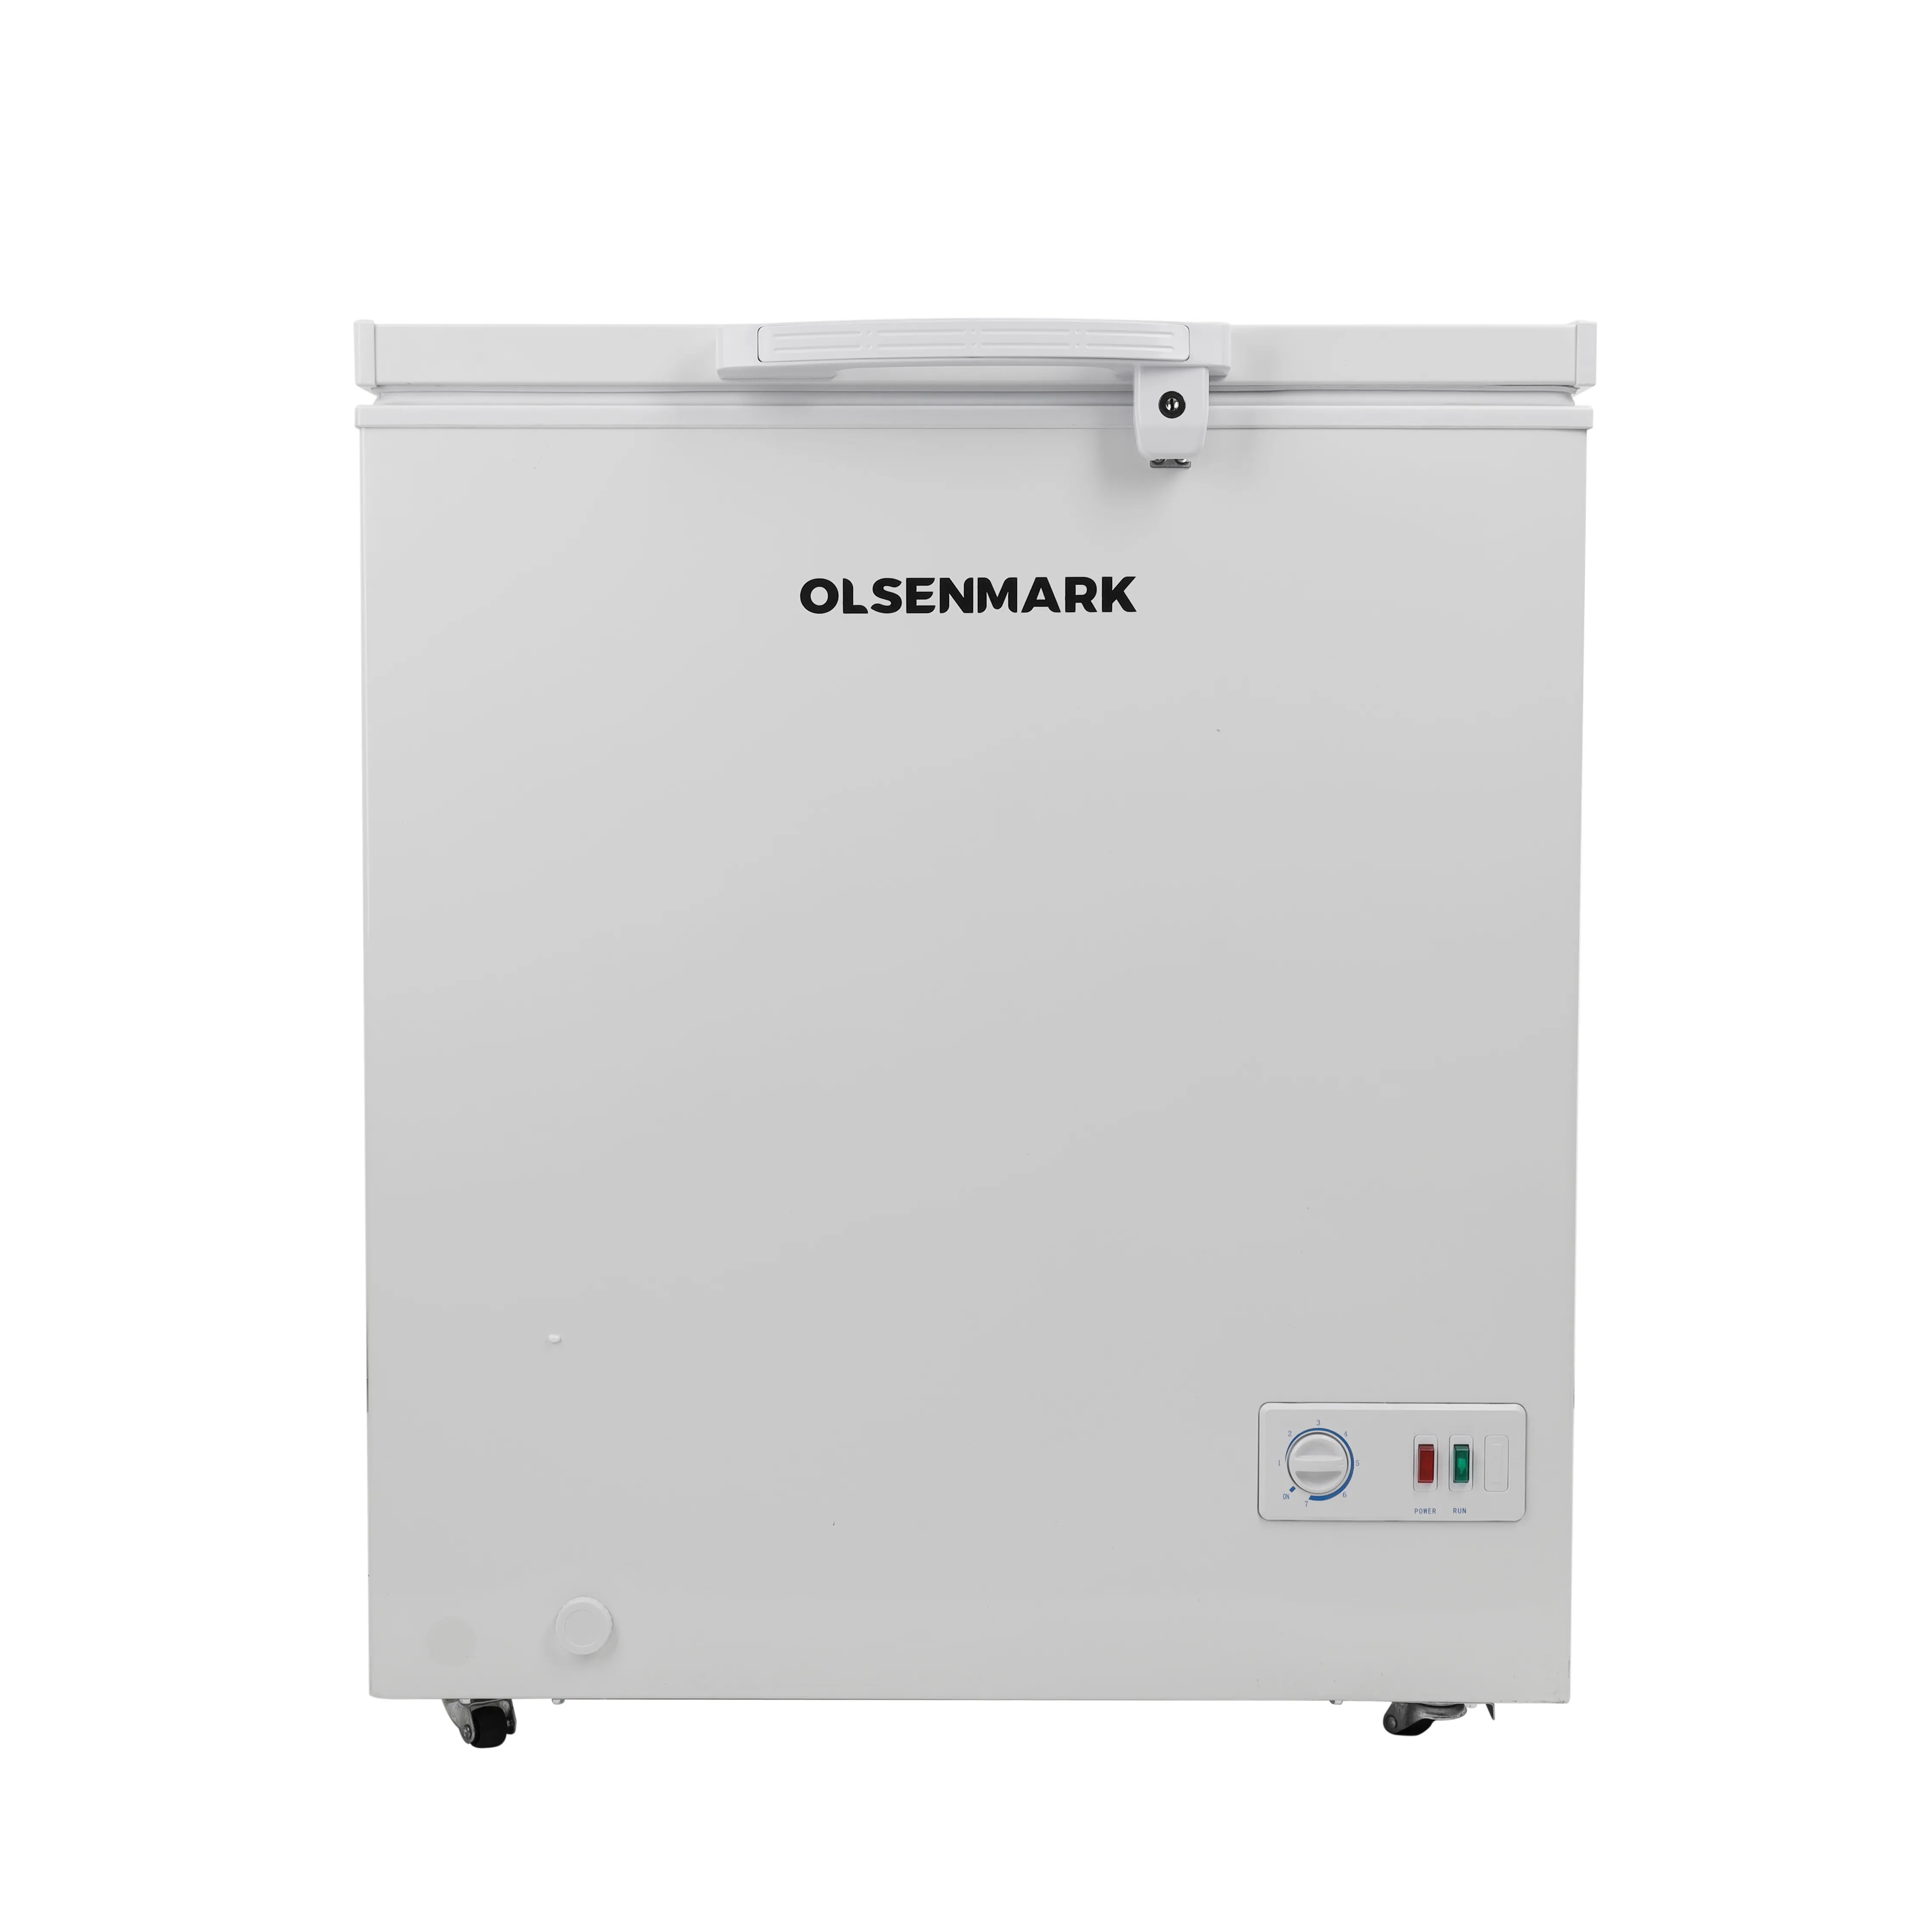 Olsenmark Chest Freezer 170L - Portable Refrigerator, Adjustable Thermostat Knob, Compact Refrigerator Ideal for Retailers, Home, Medical, Restaurants & More